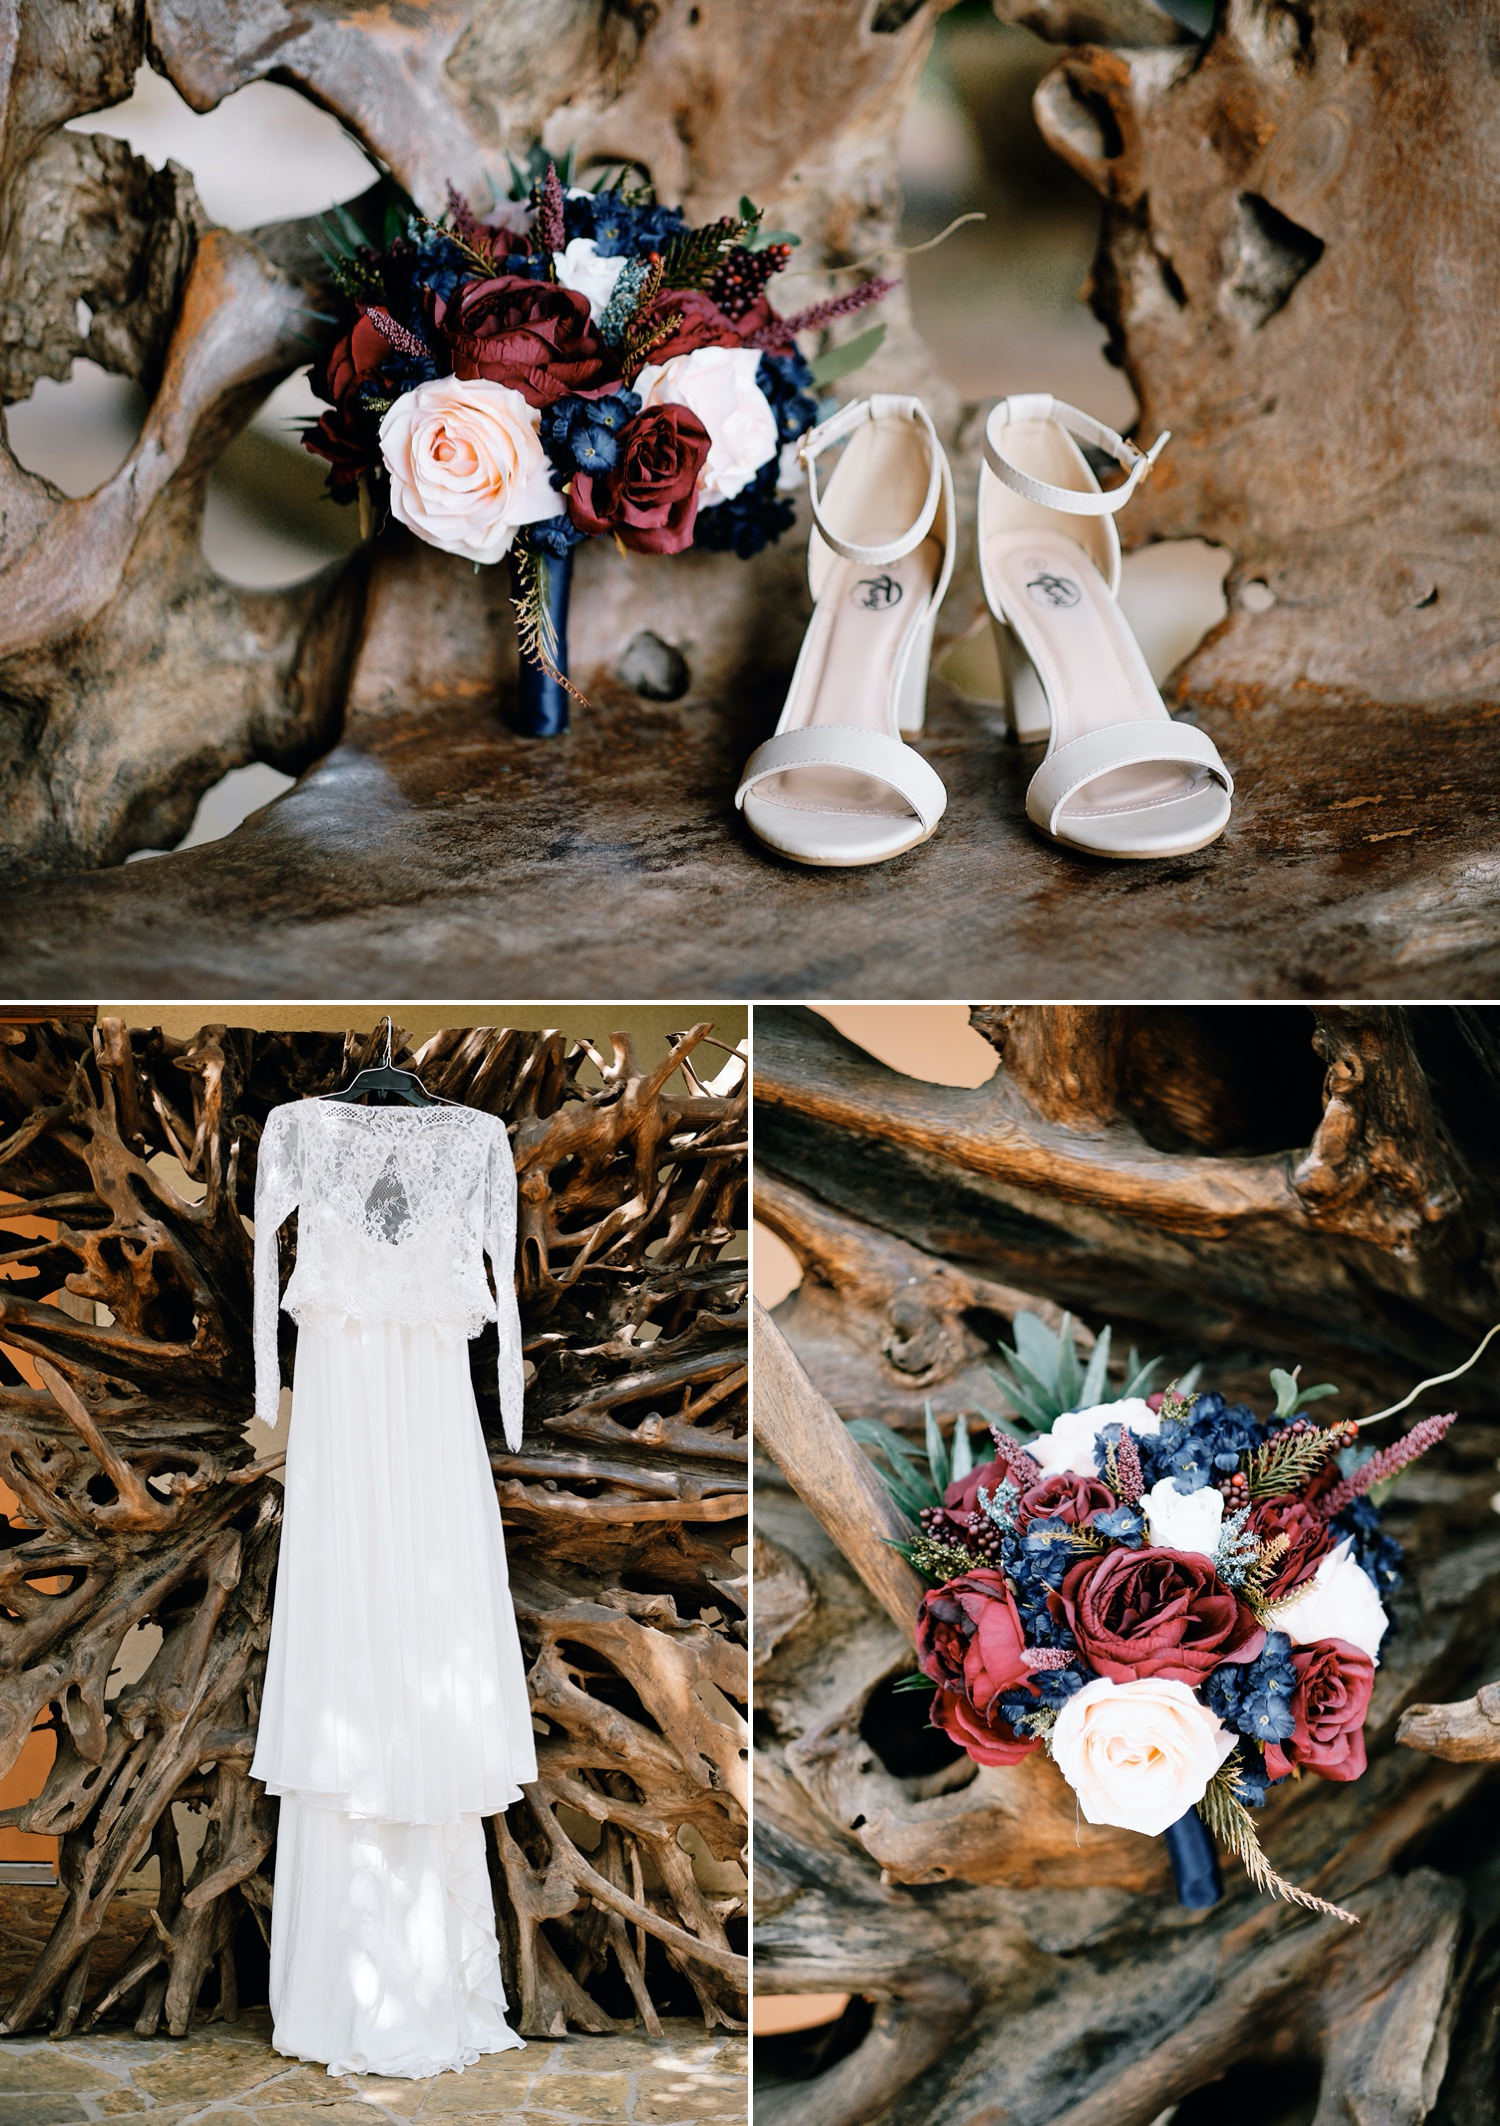 Daysy's bridal details by Austin wedding photographers Mercedes Morgan Photography